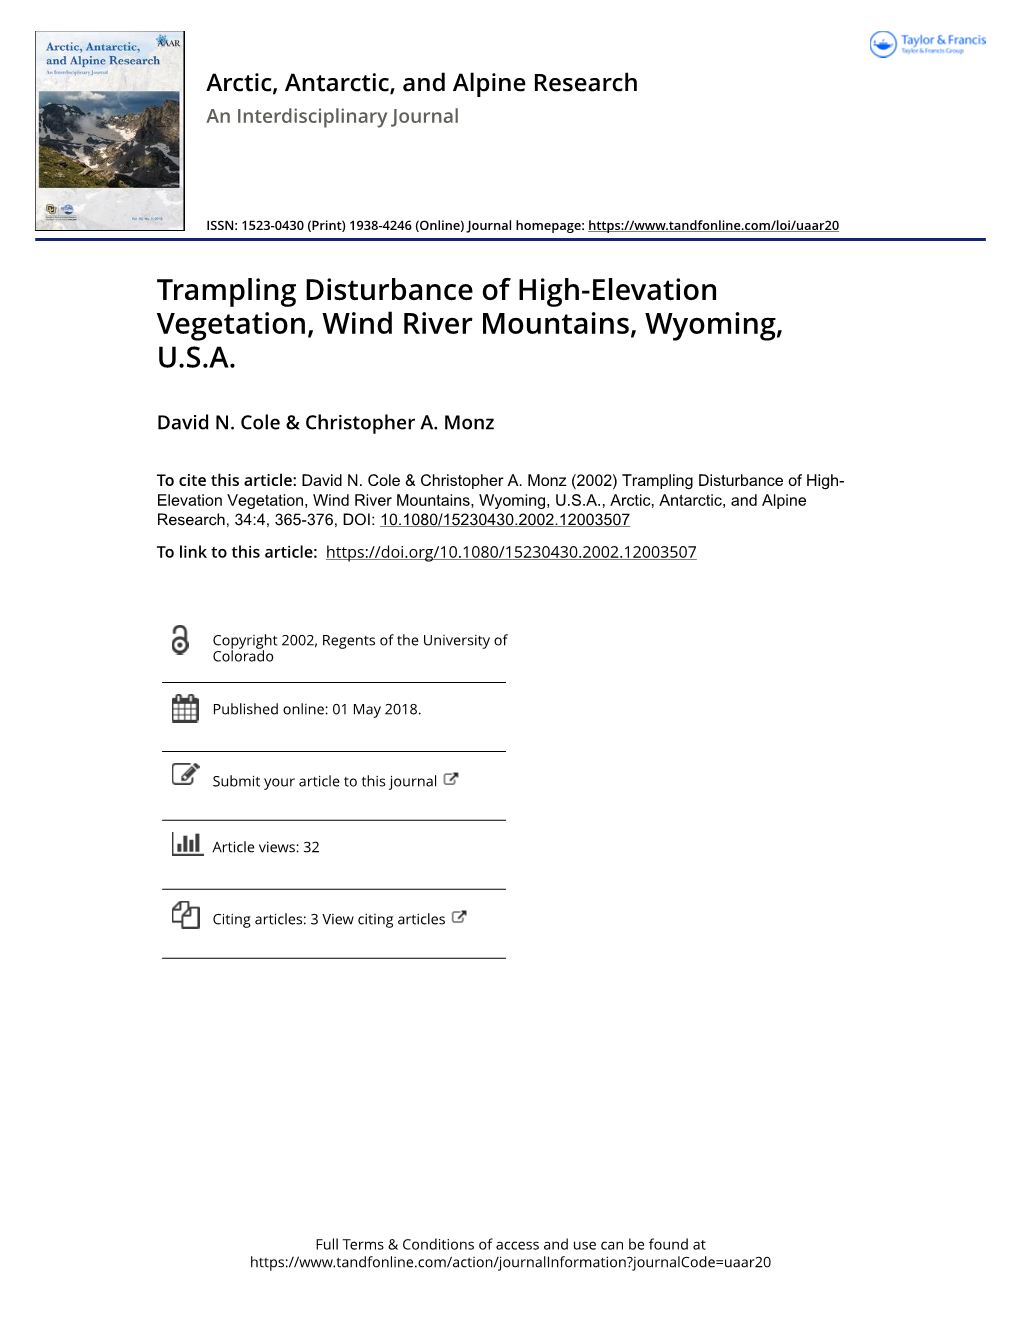 Trampling Disturbance of High-Elevation Vegetation, Wind River Mountains, Wyoming, U.S.A